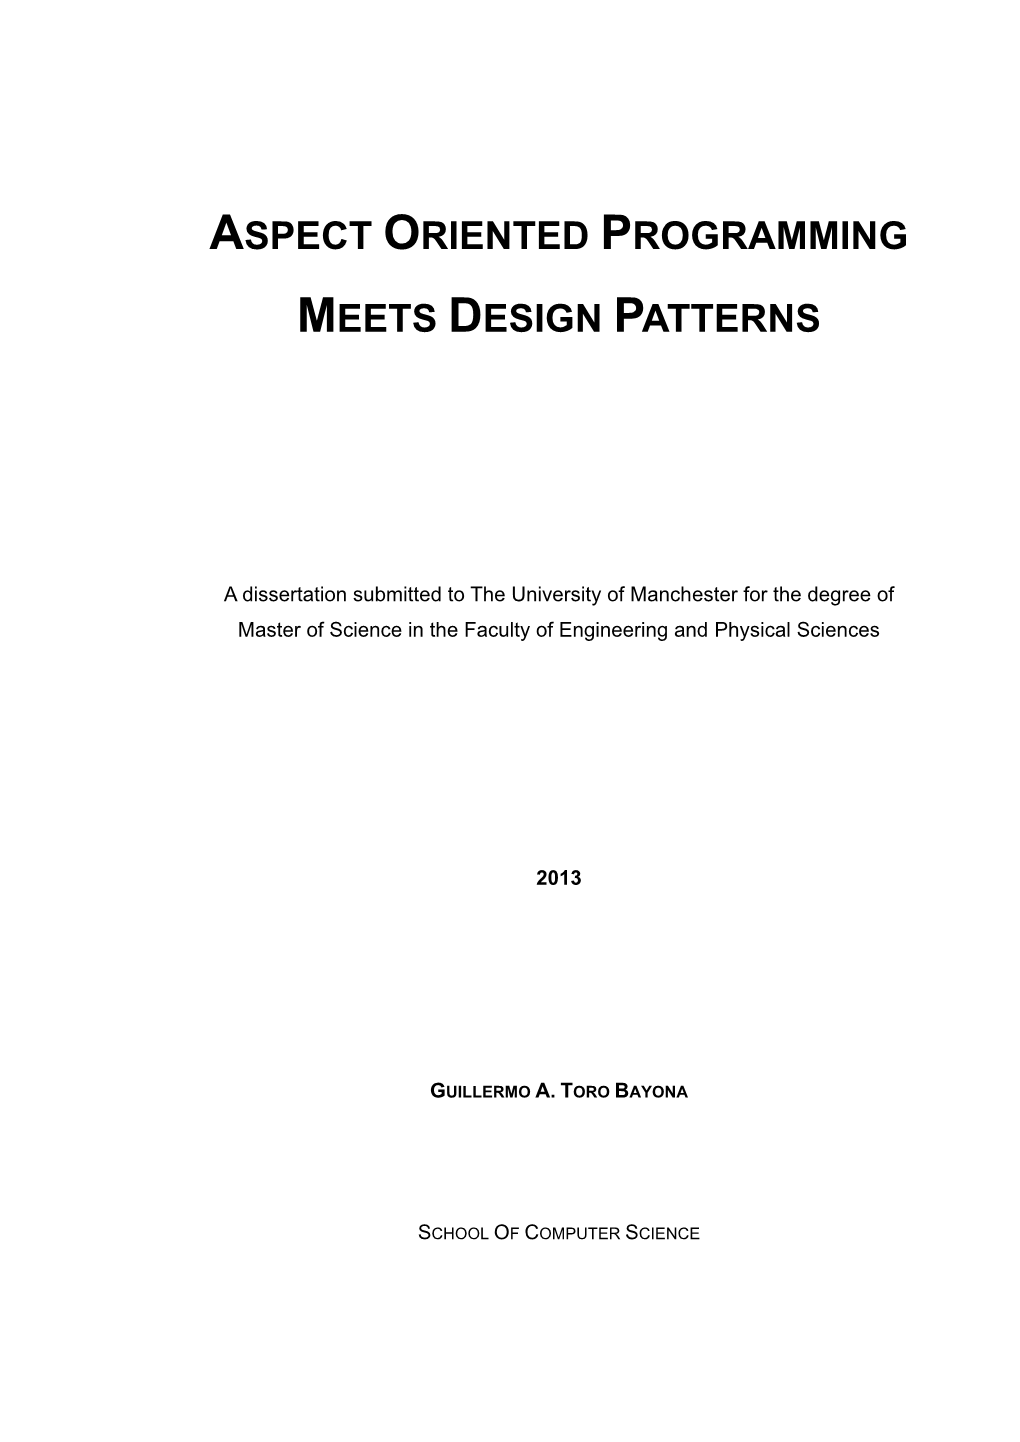 Aspect Oriented Programming Meets Design Patterns